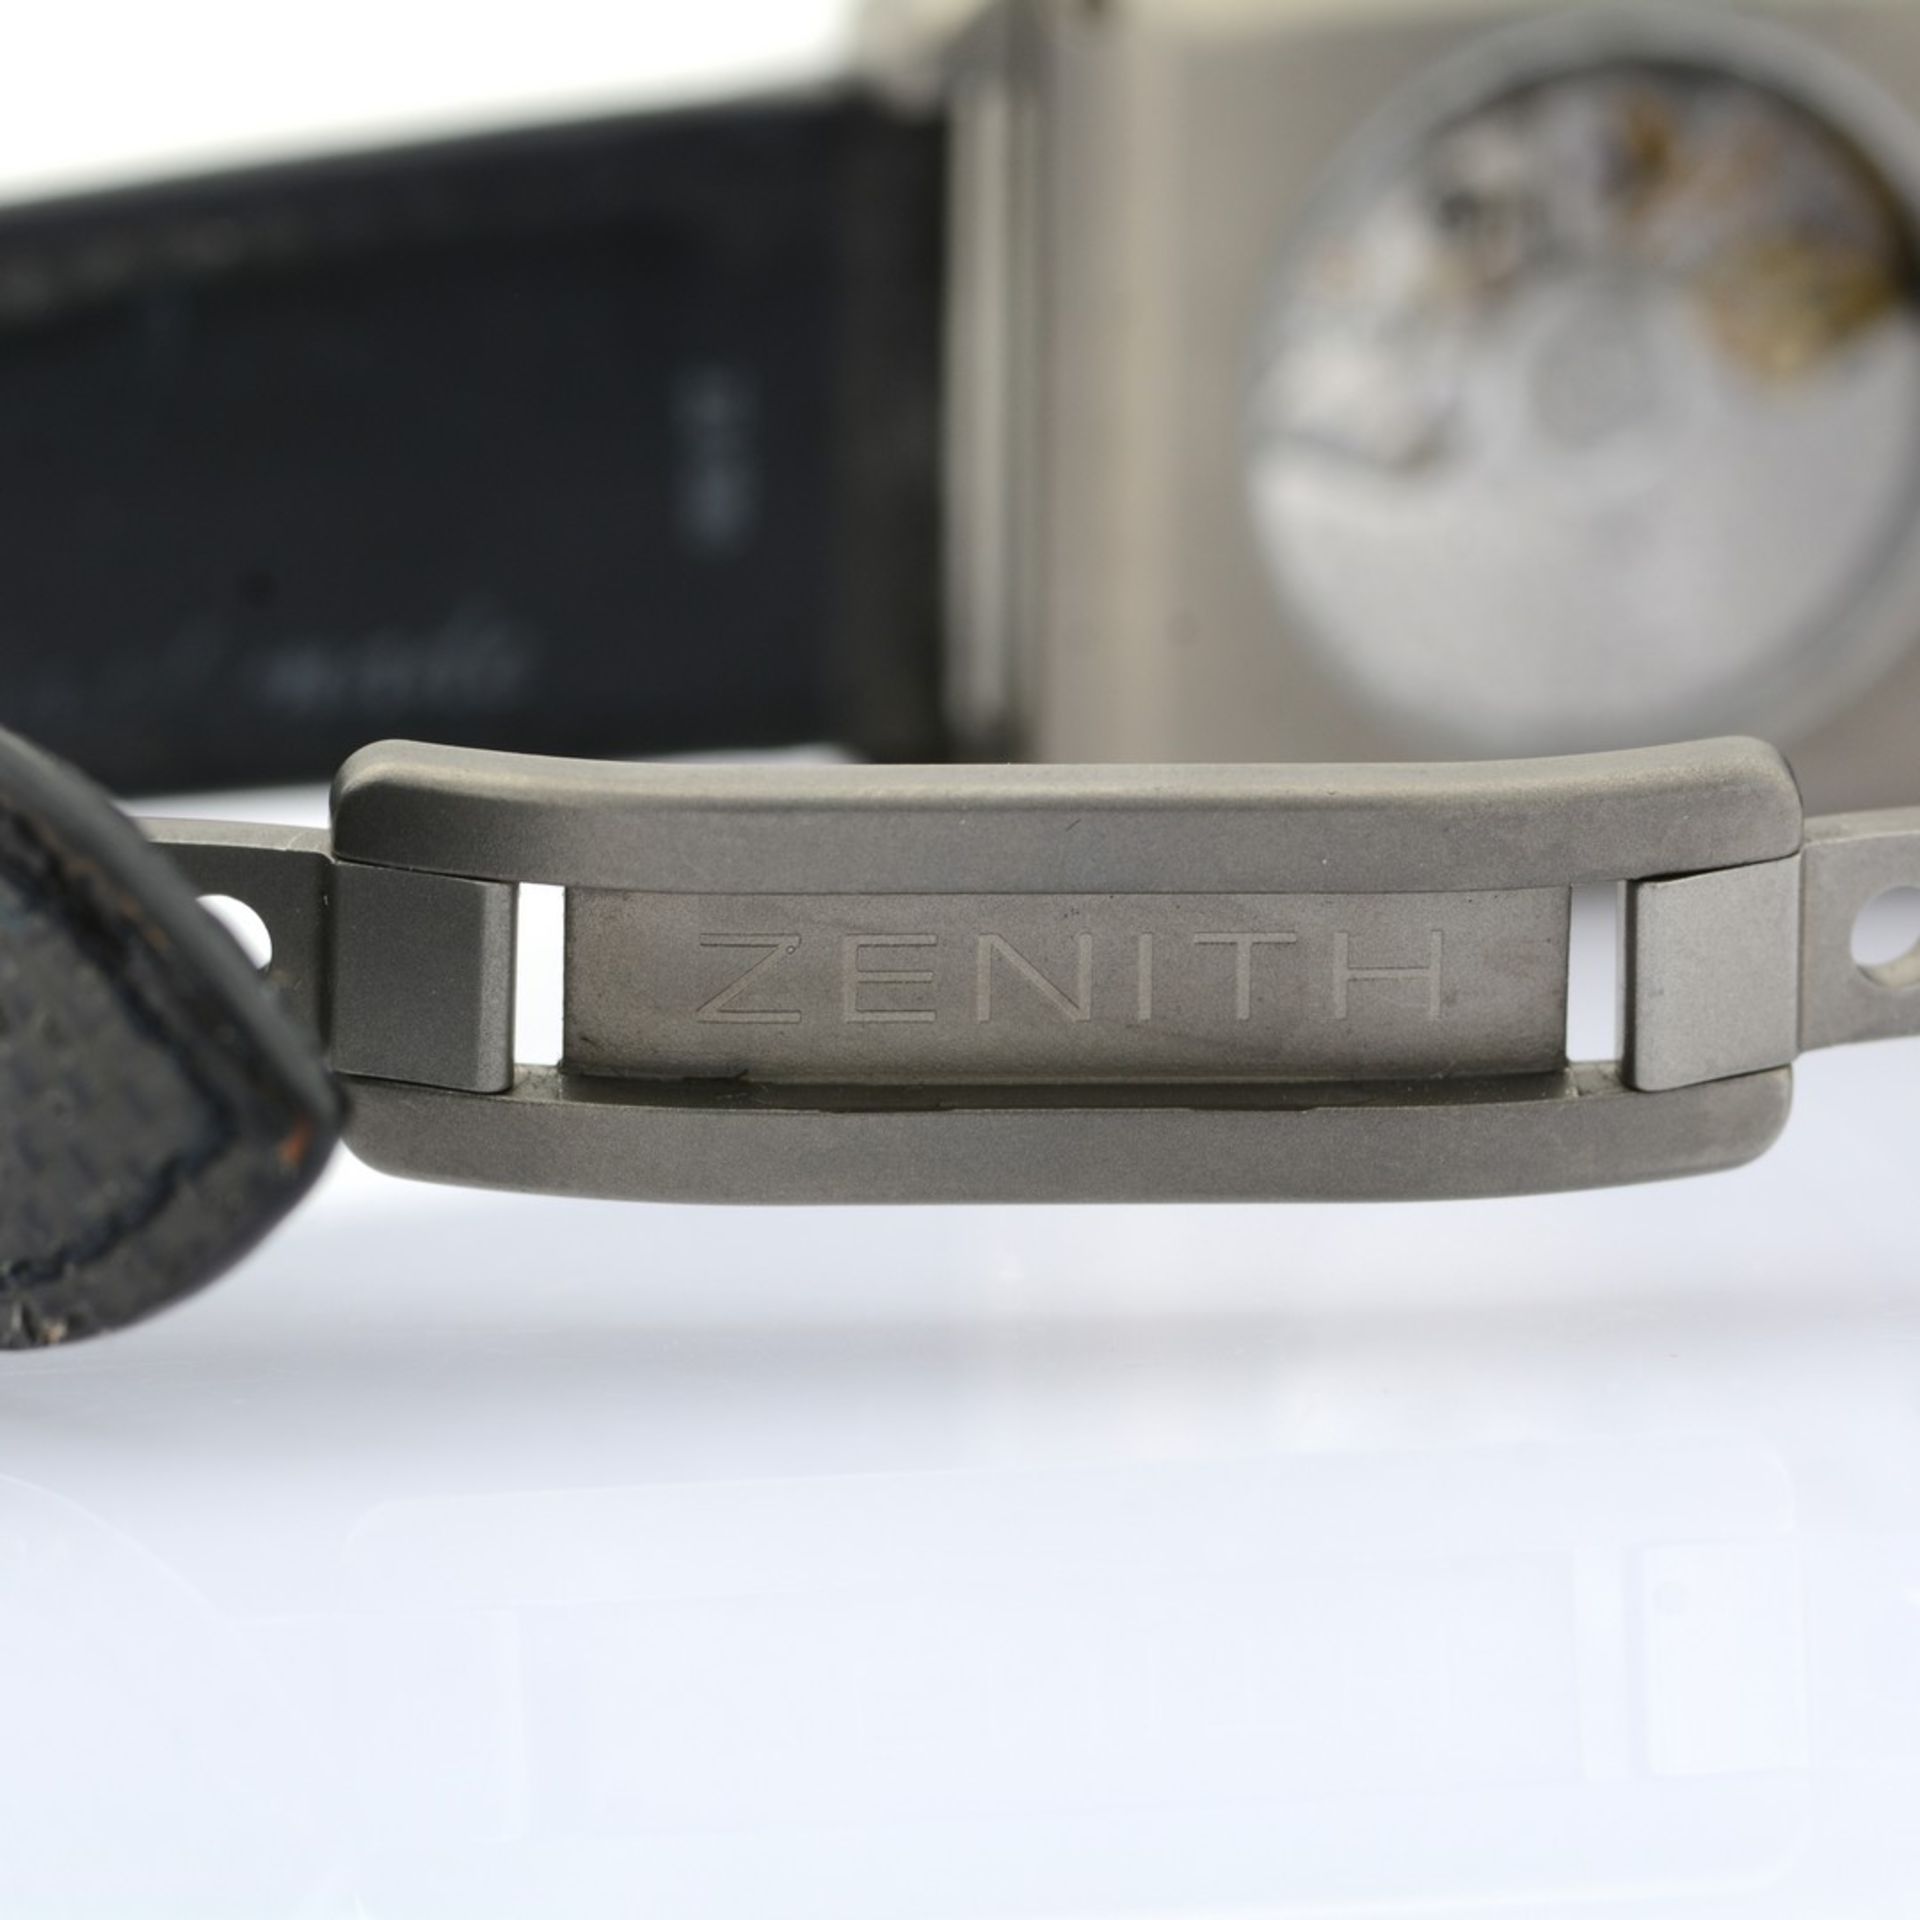 Zenith / Port Royal Open Concept - Gentlmen's Titanium Wrist Watch - Image 10 of 13